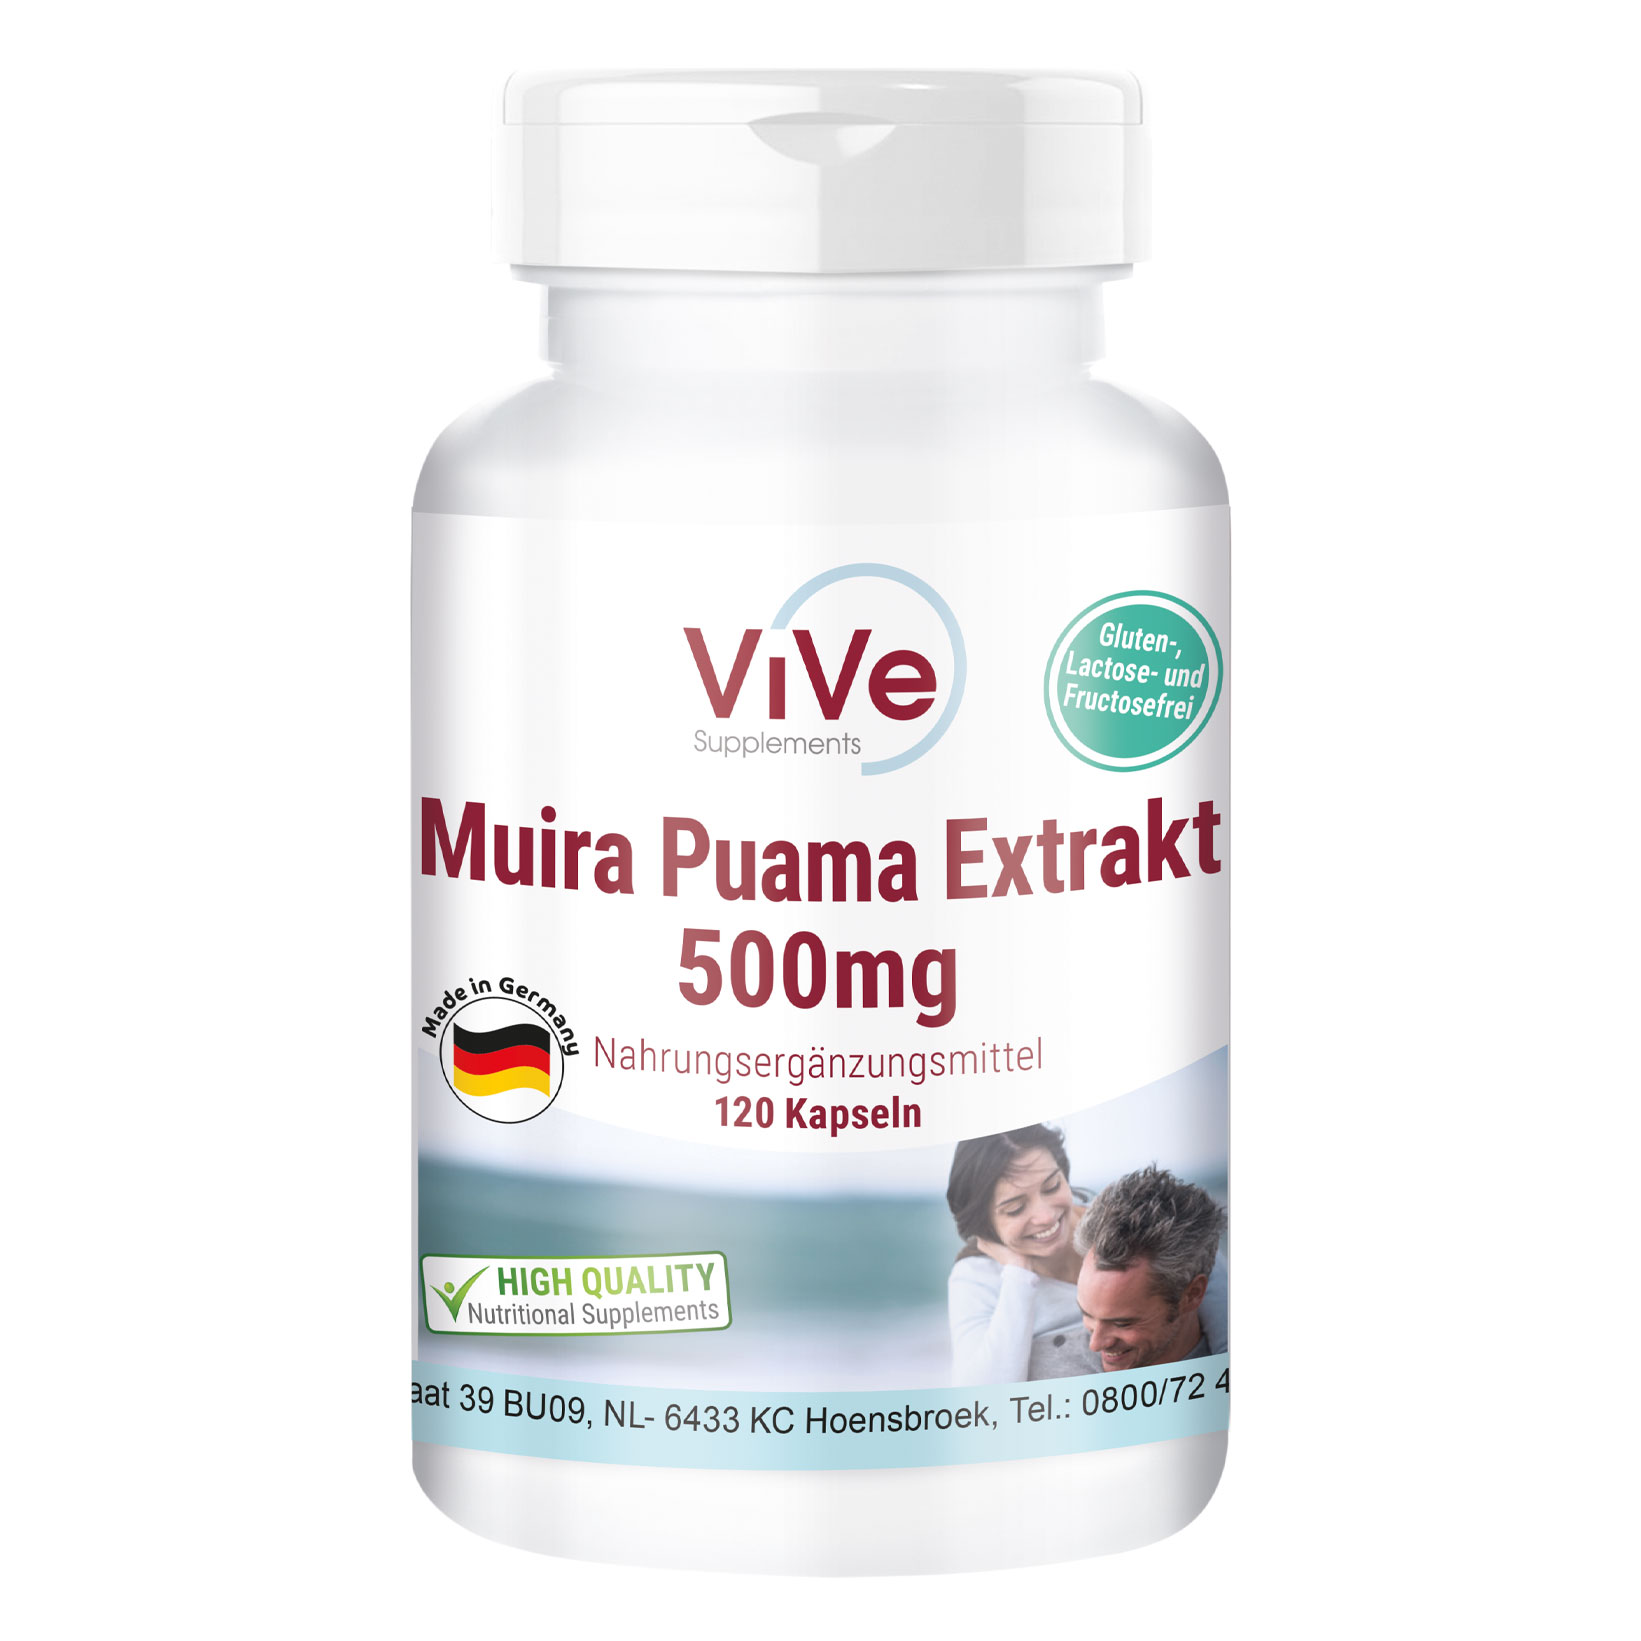 Muira Puama Extrakt 500mg - Sale - MHD - 04/25